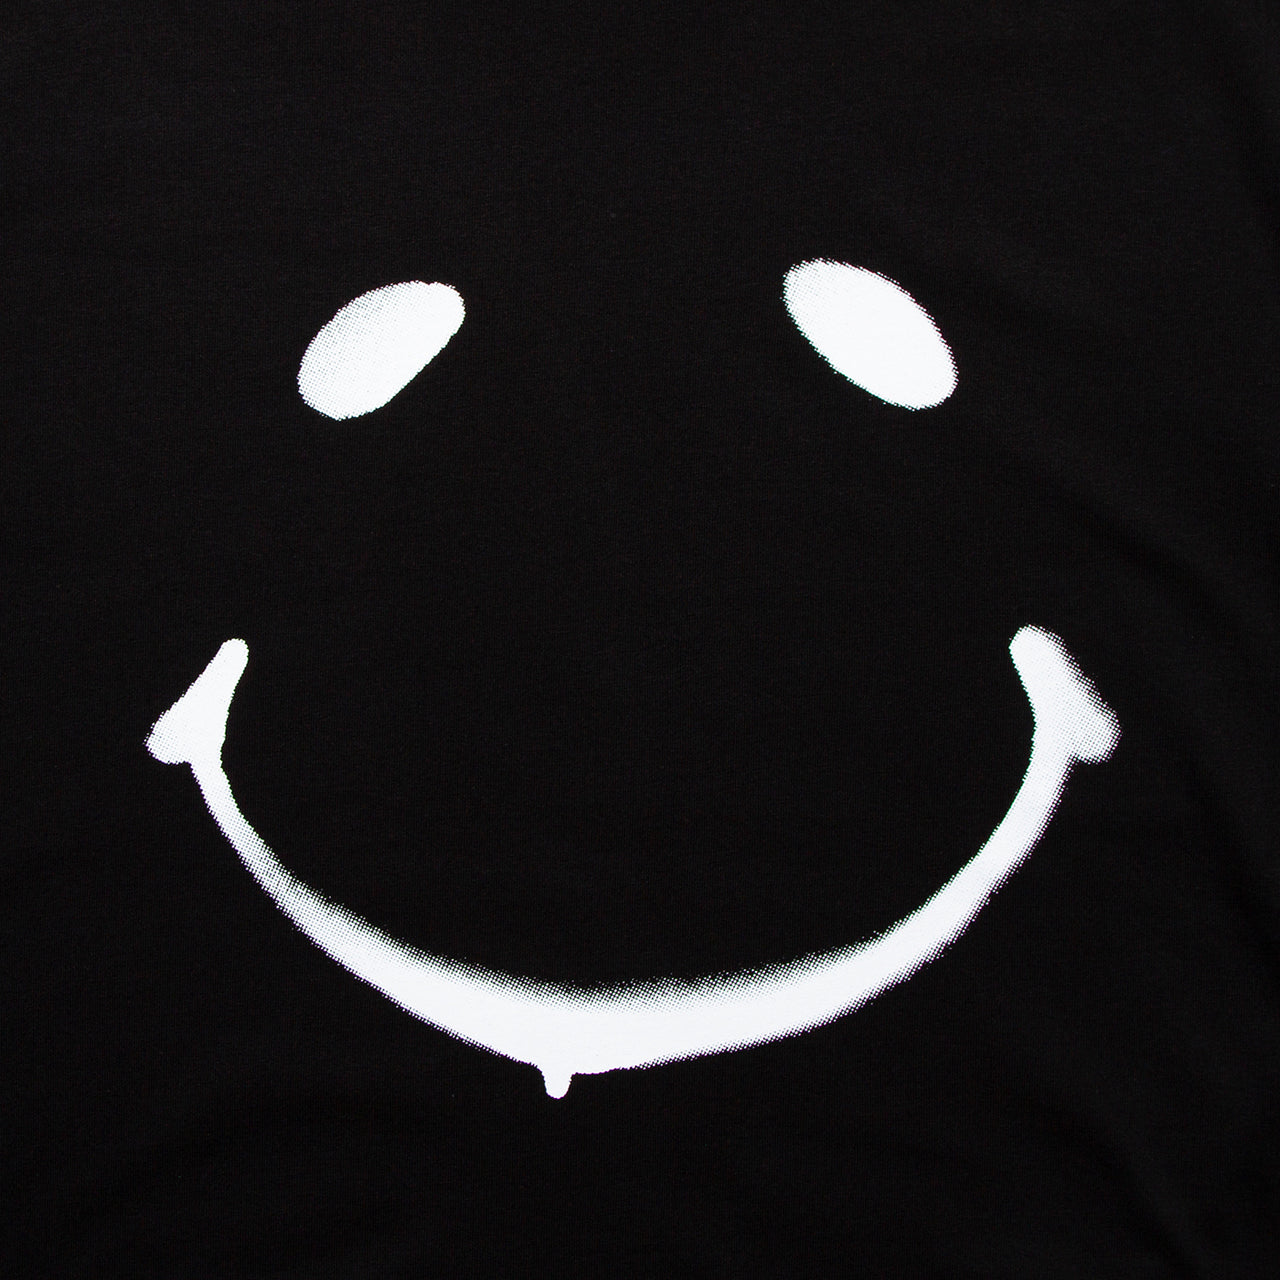 Smiley Stencilled Front - V1 Oversized Tshirt - Black